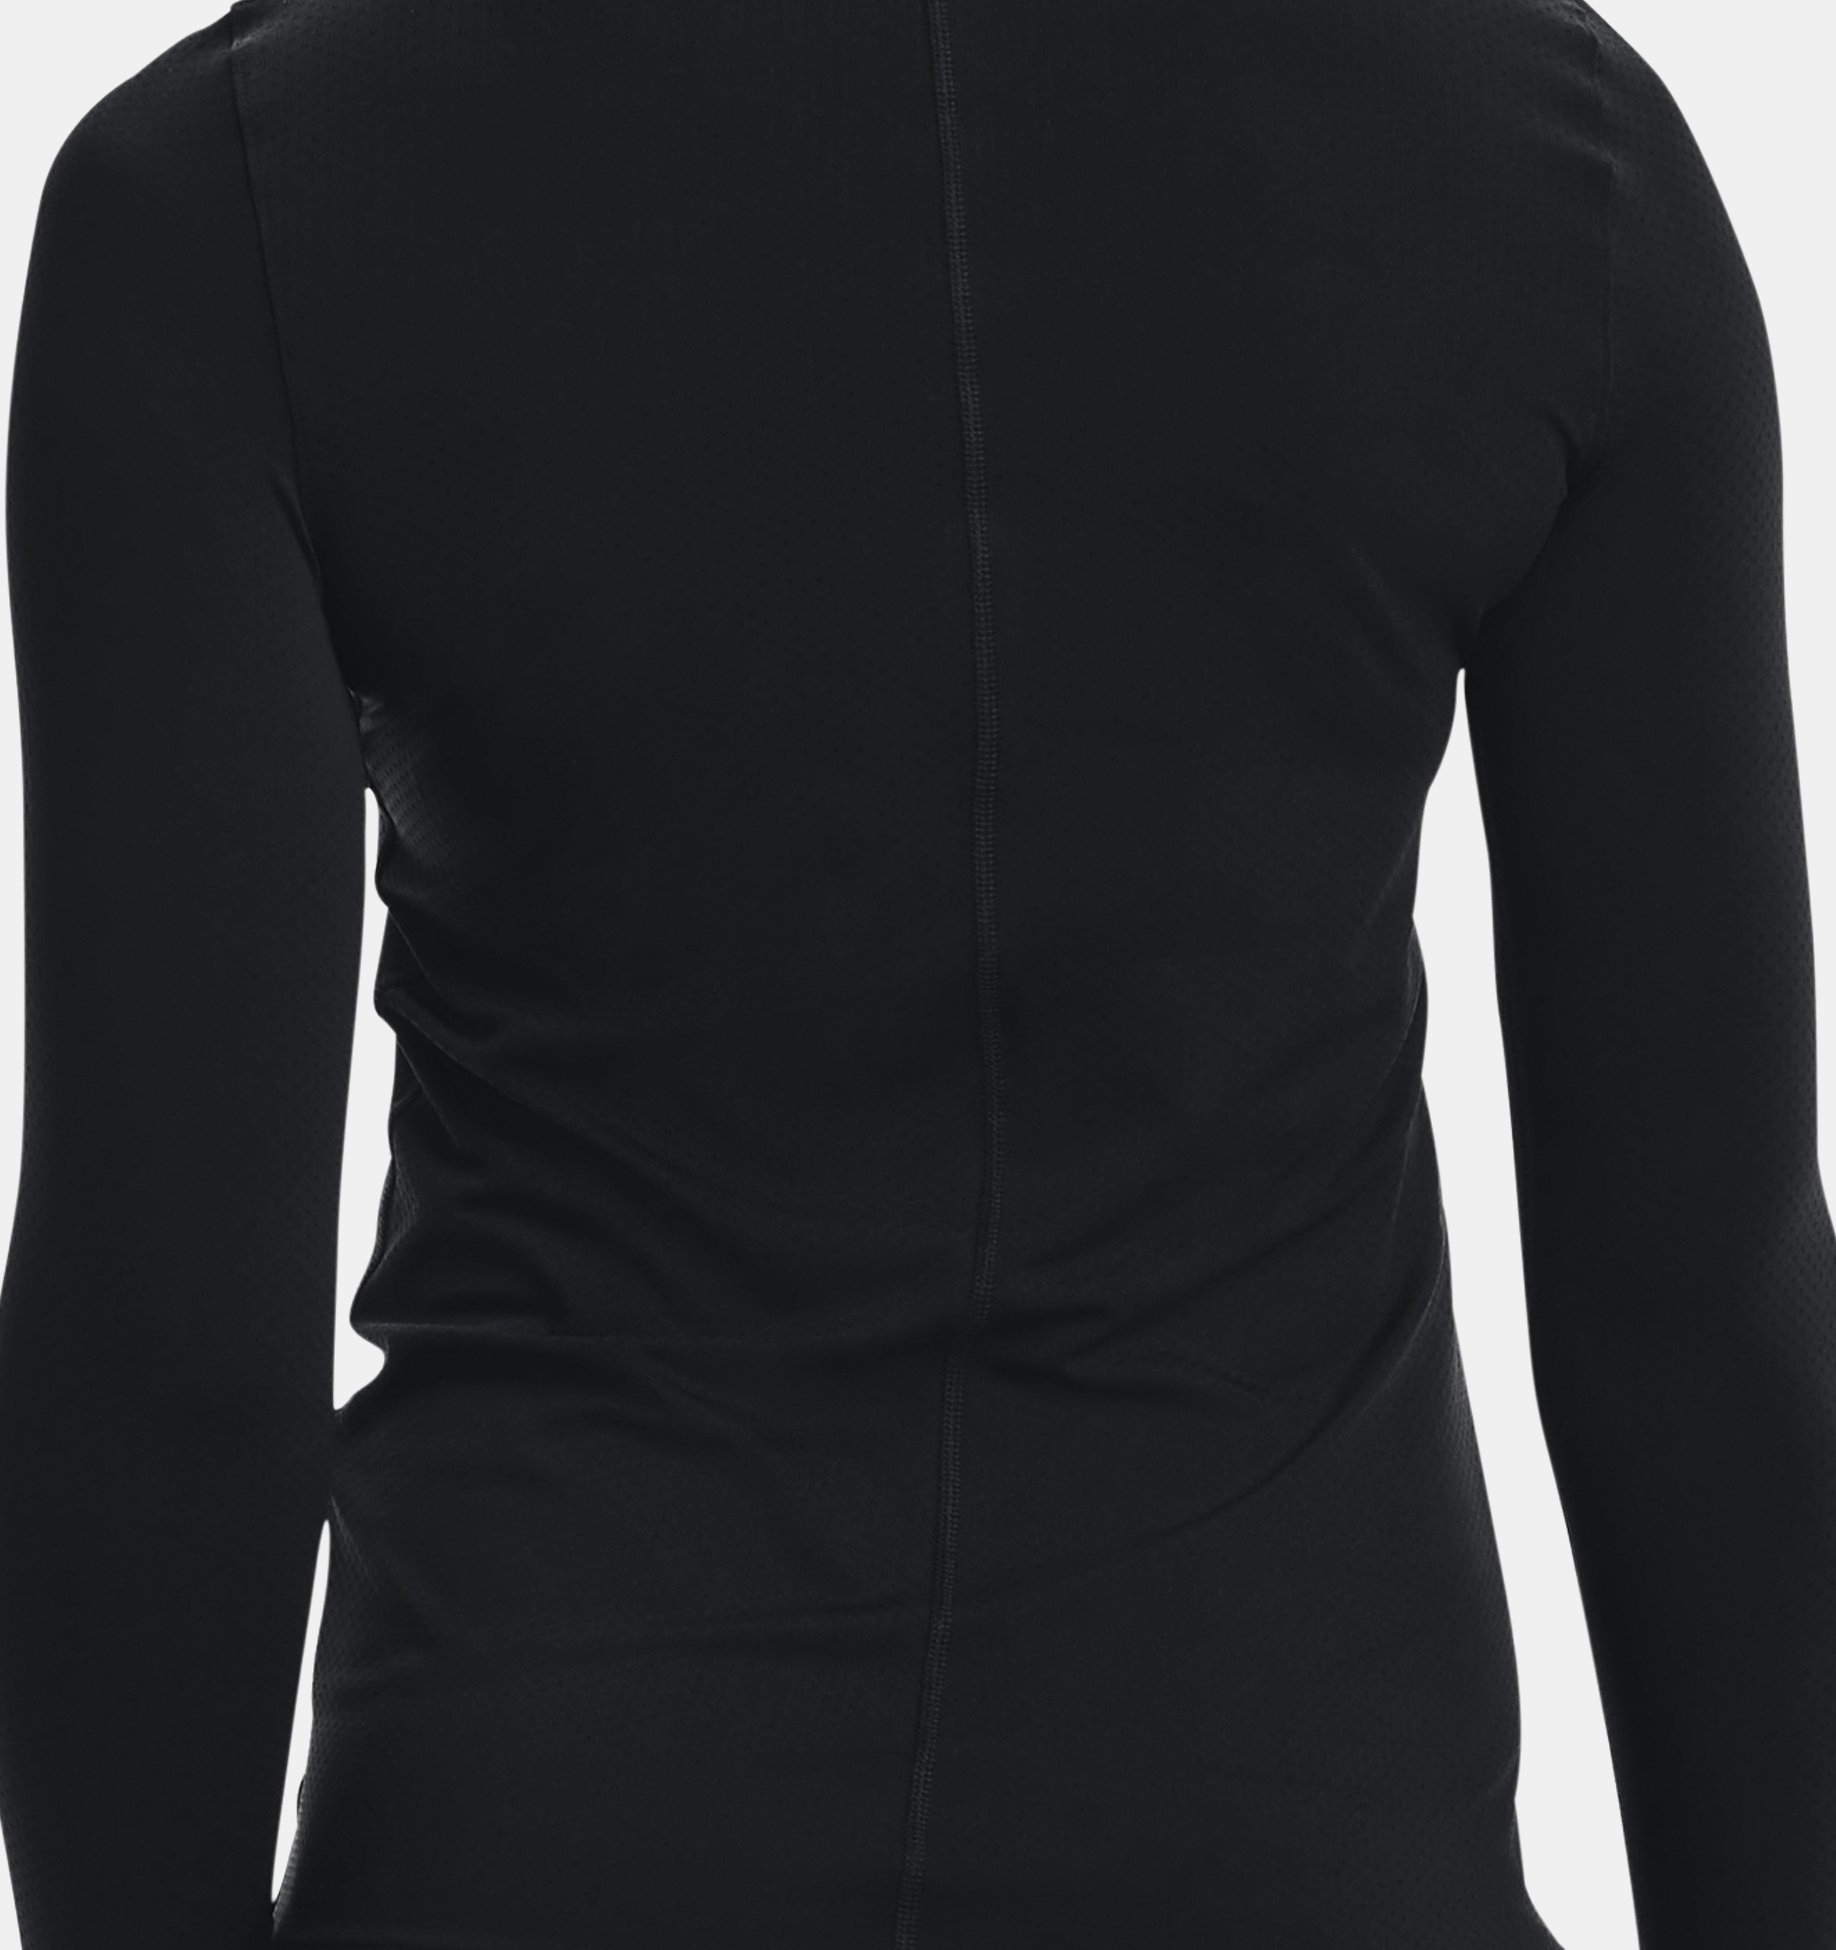 Under Armour Catalyst Thermal Shirt YXL Loose All Season Gear Black Long  Sleeves